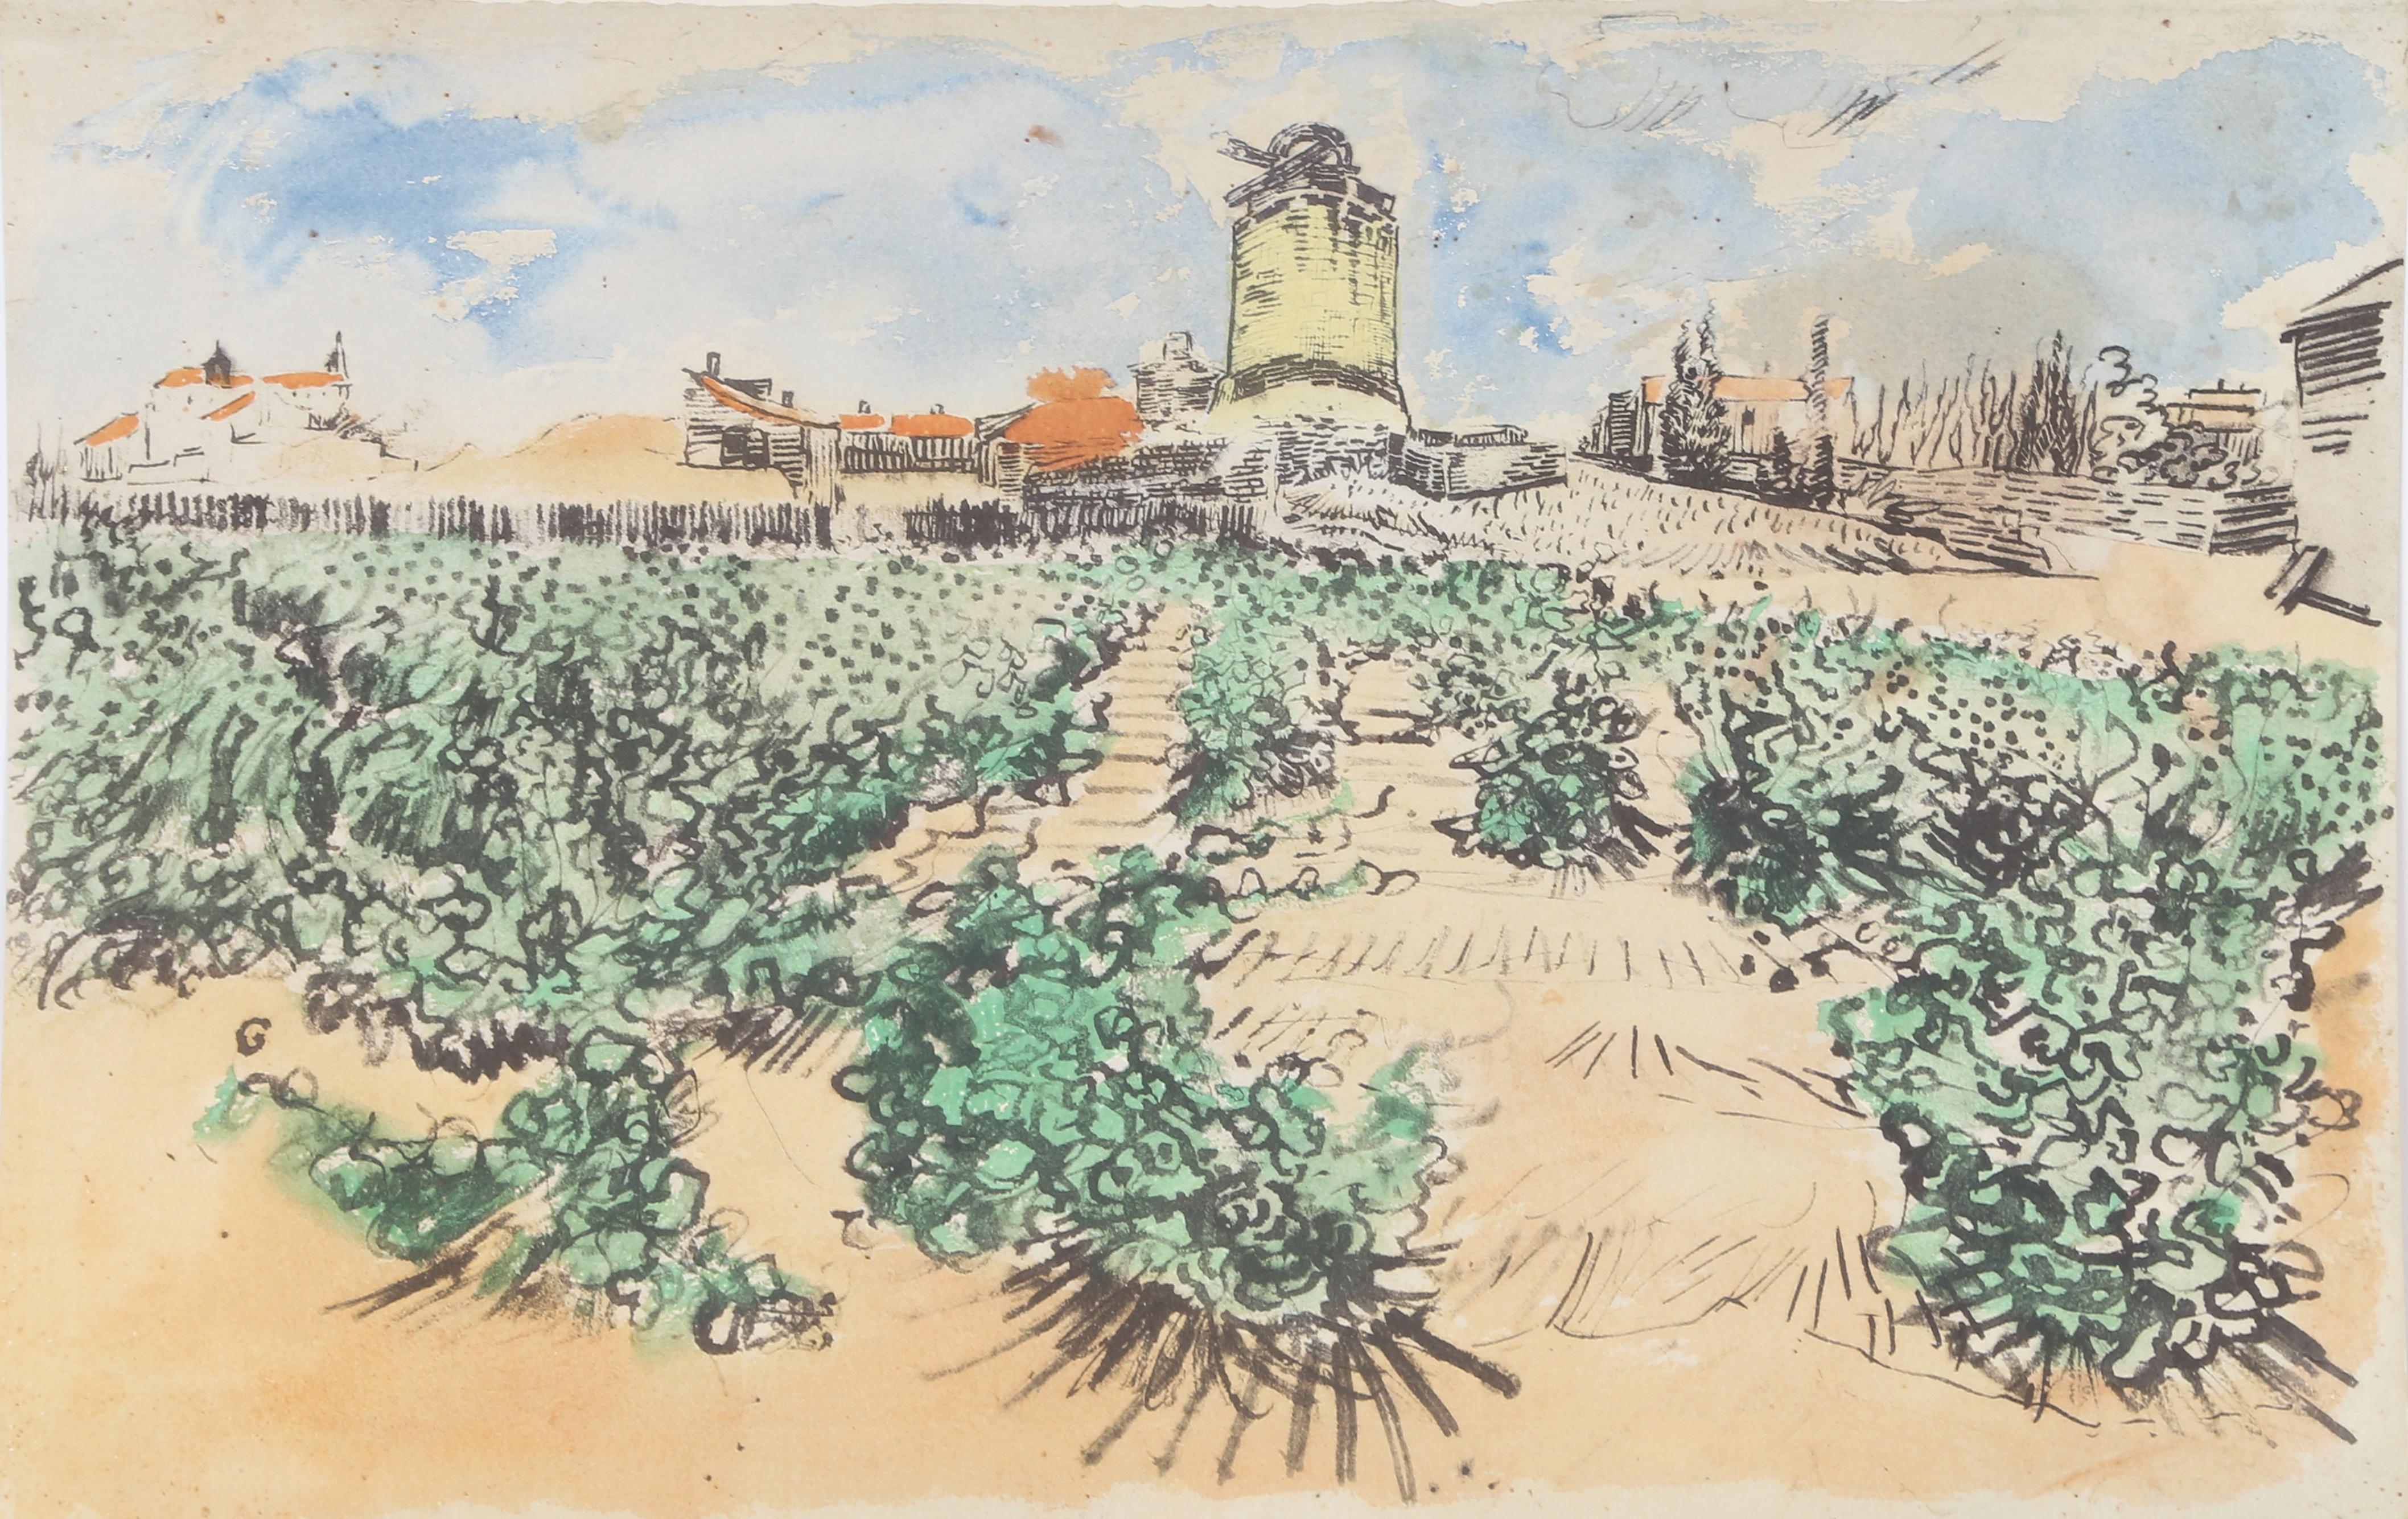 The Mill of Alphonse Daudet at Fontevieille, Lithograph after Vincent van Gogh - Print by (After) Vincent van Gogh